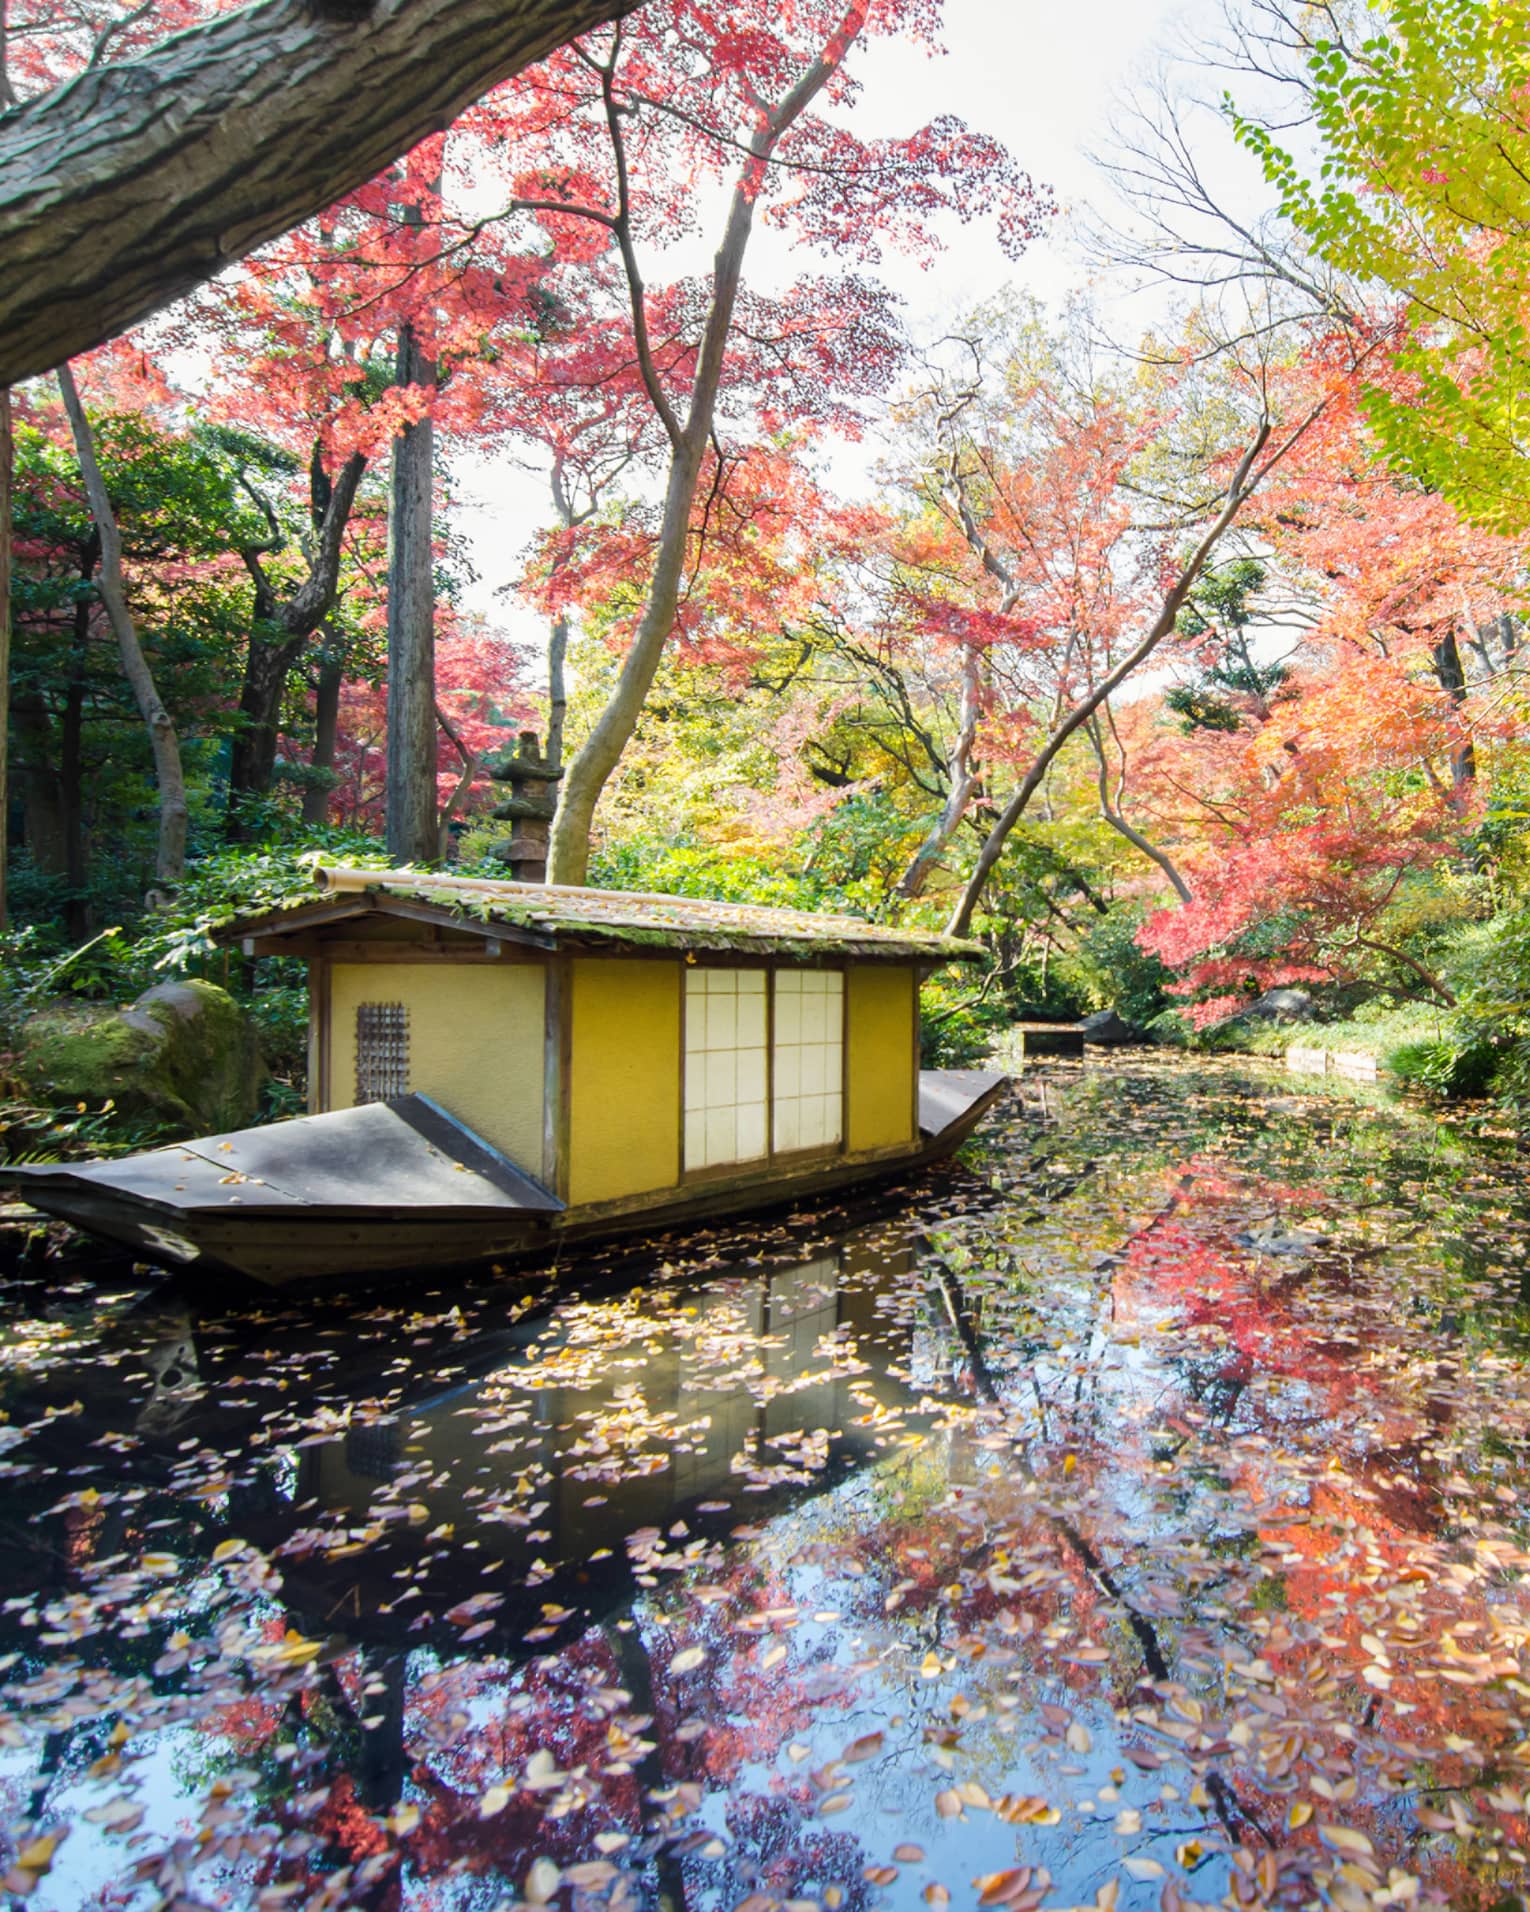 A house boat floats along a leaf-covered lake